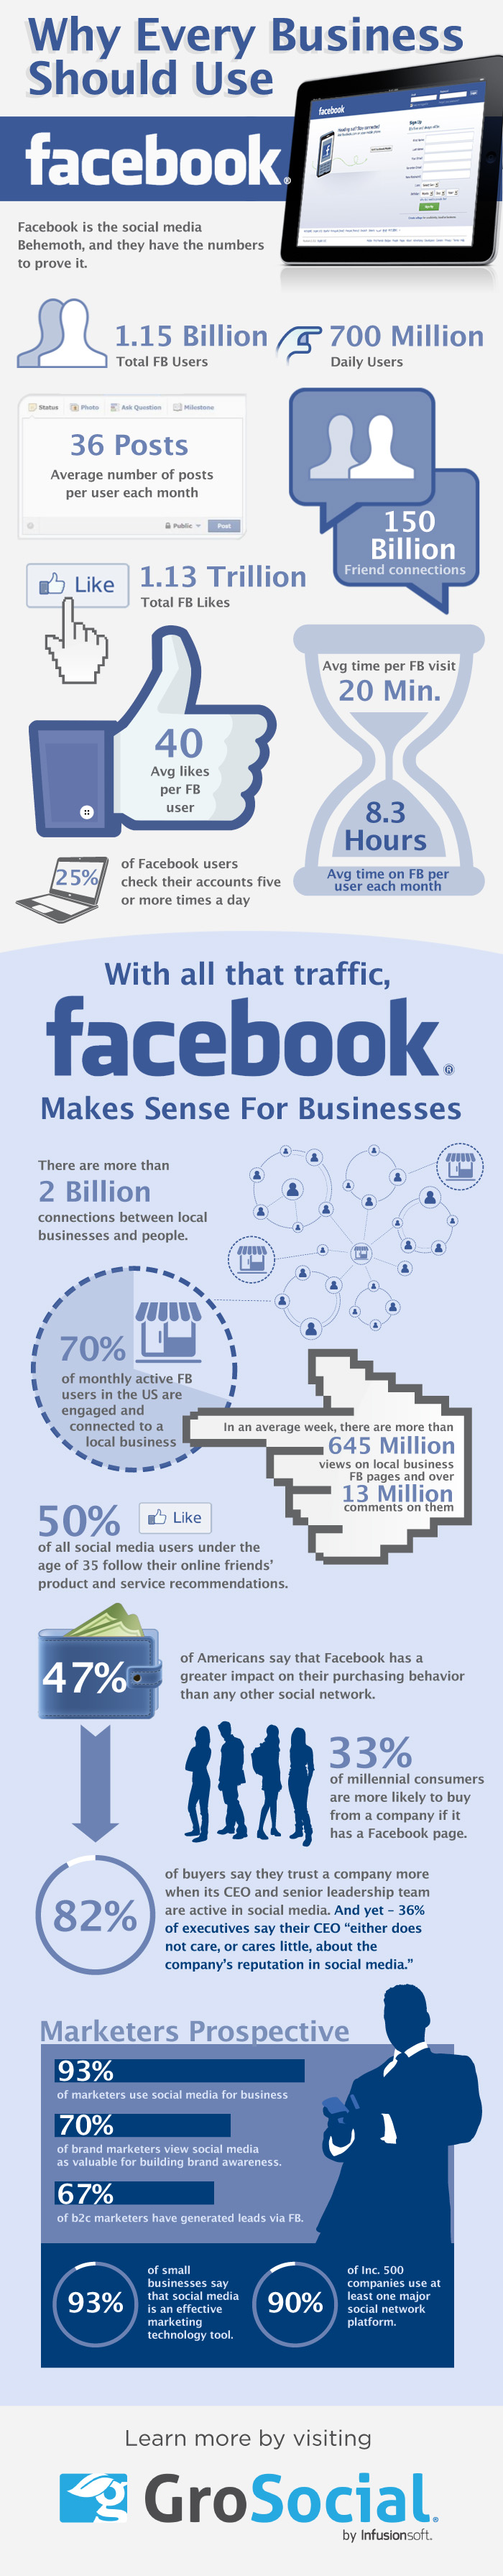 Why Use Facebook? | AC Social Media